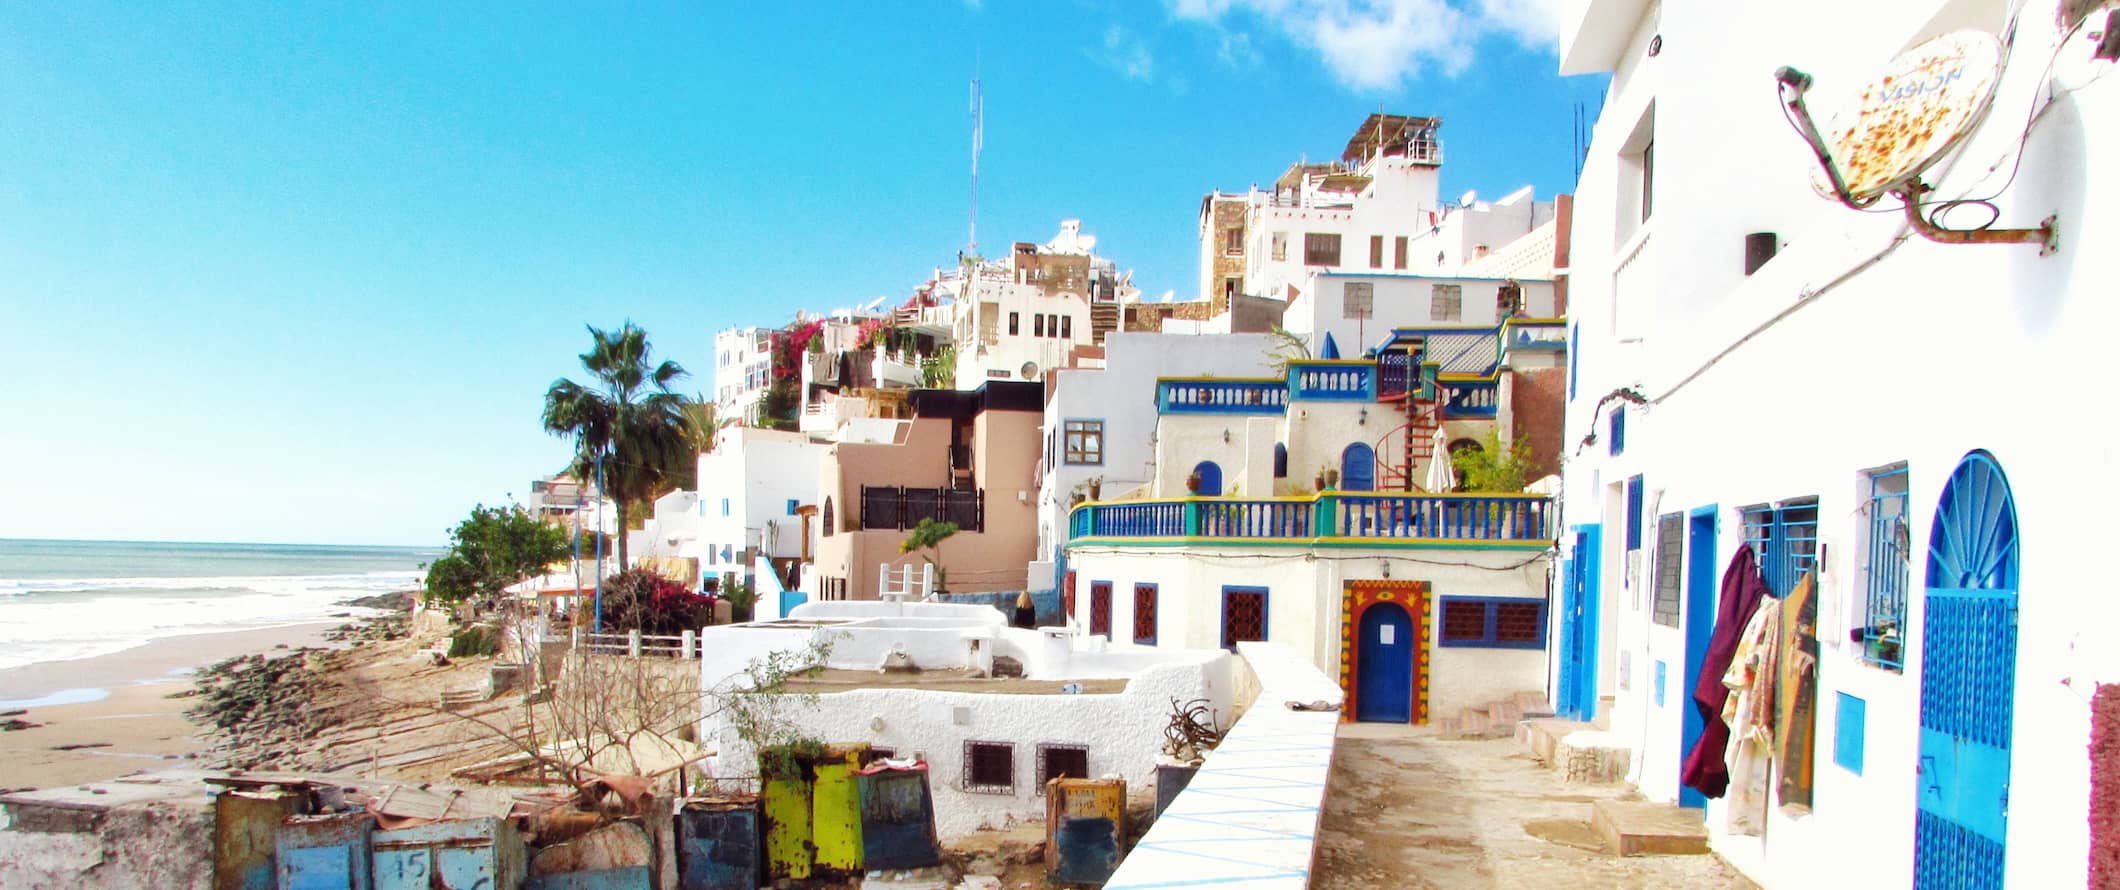 A sea-side view along a small village near the beach in sunny Morocco